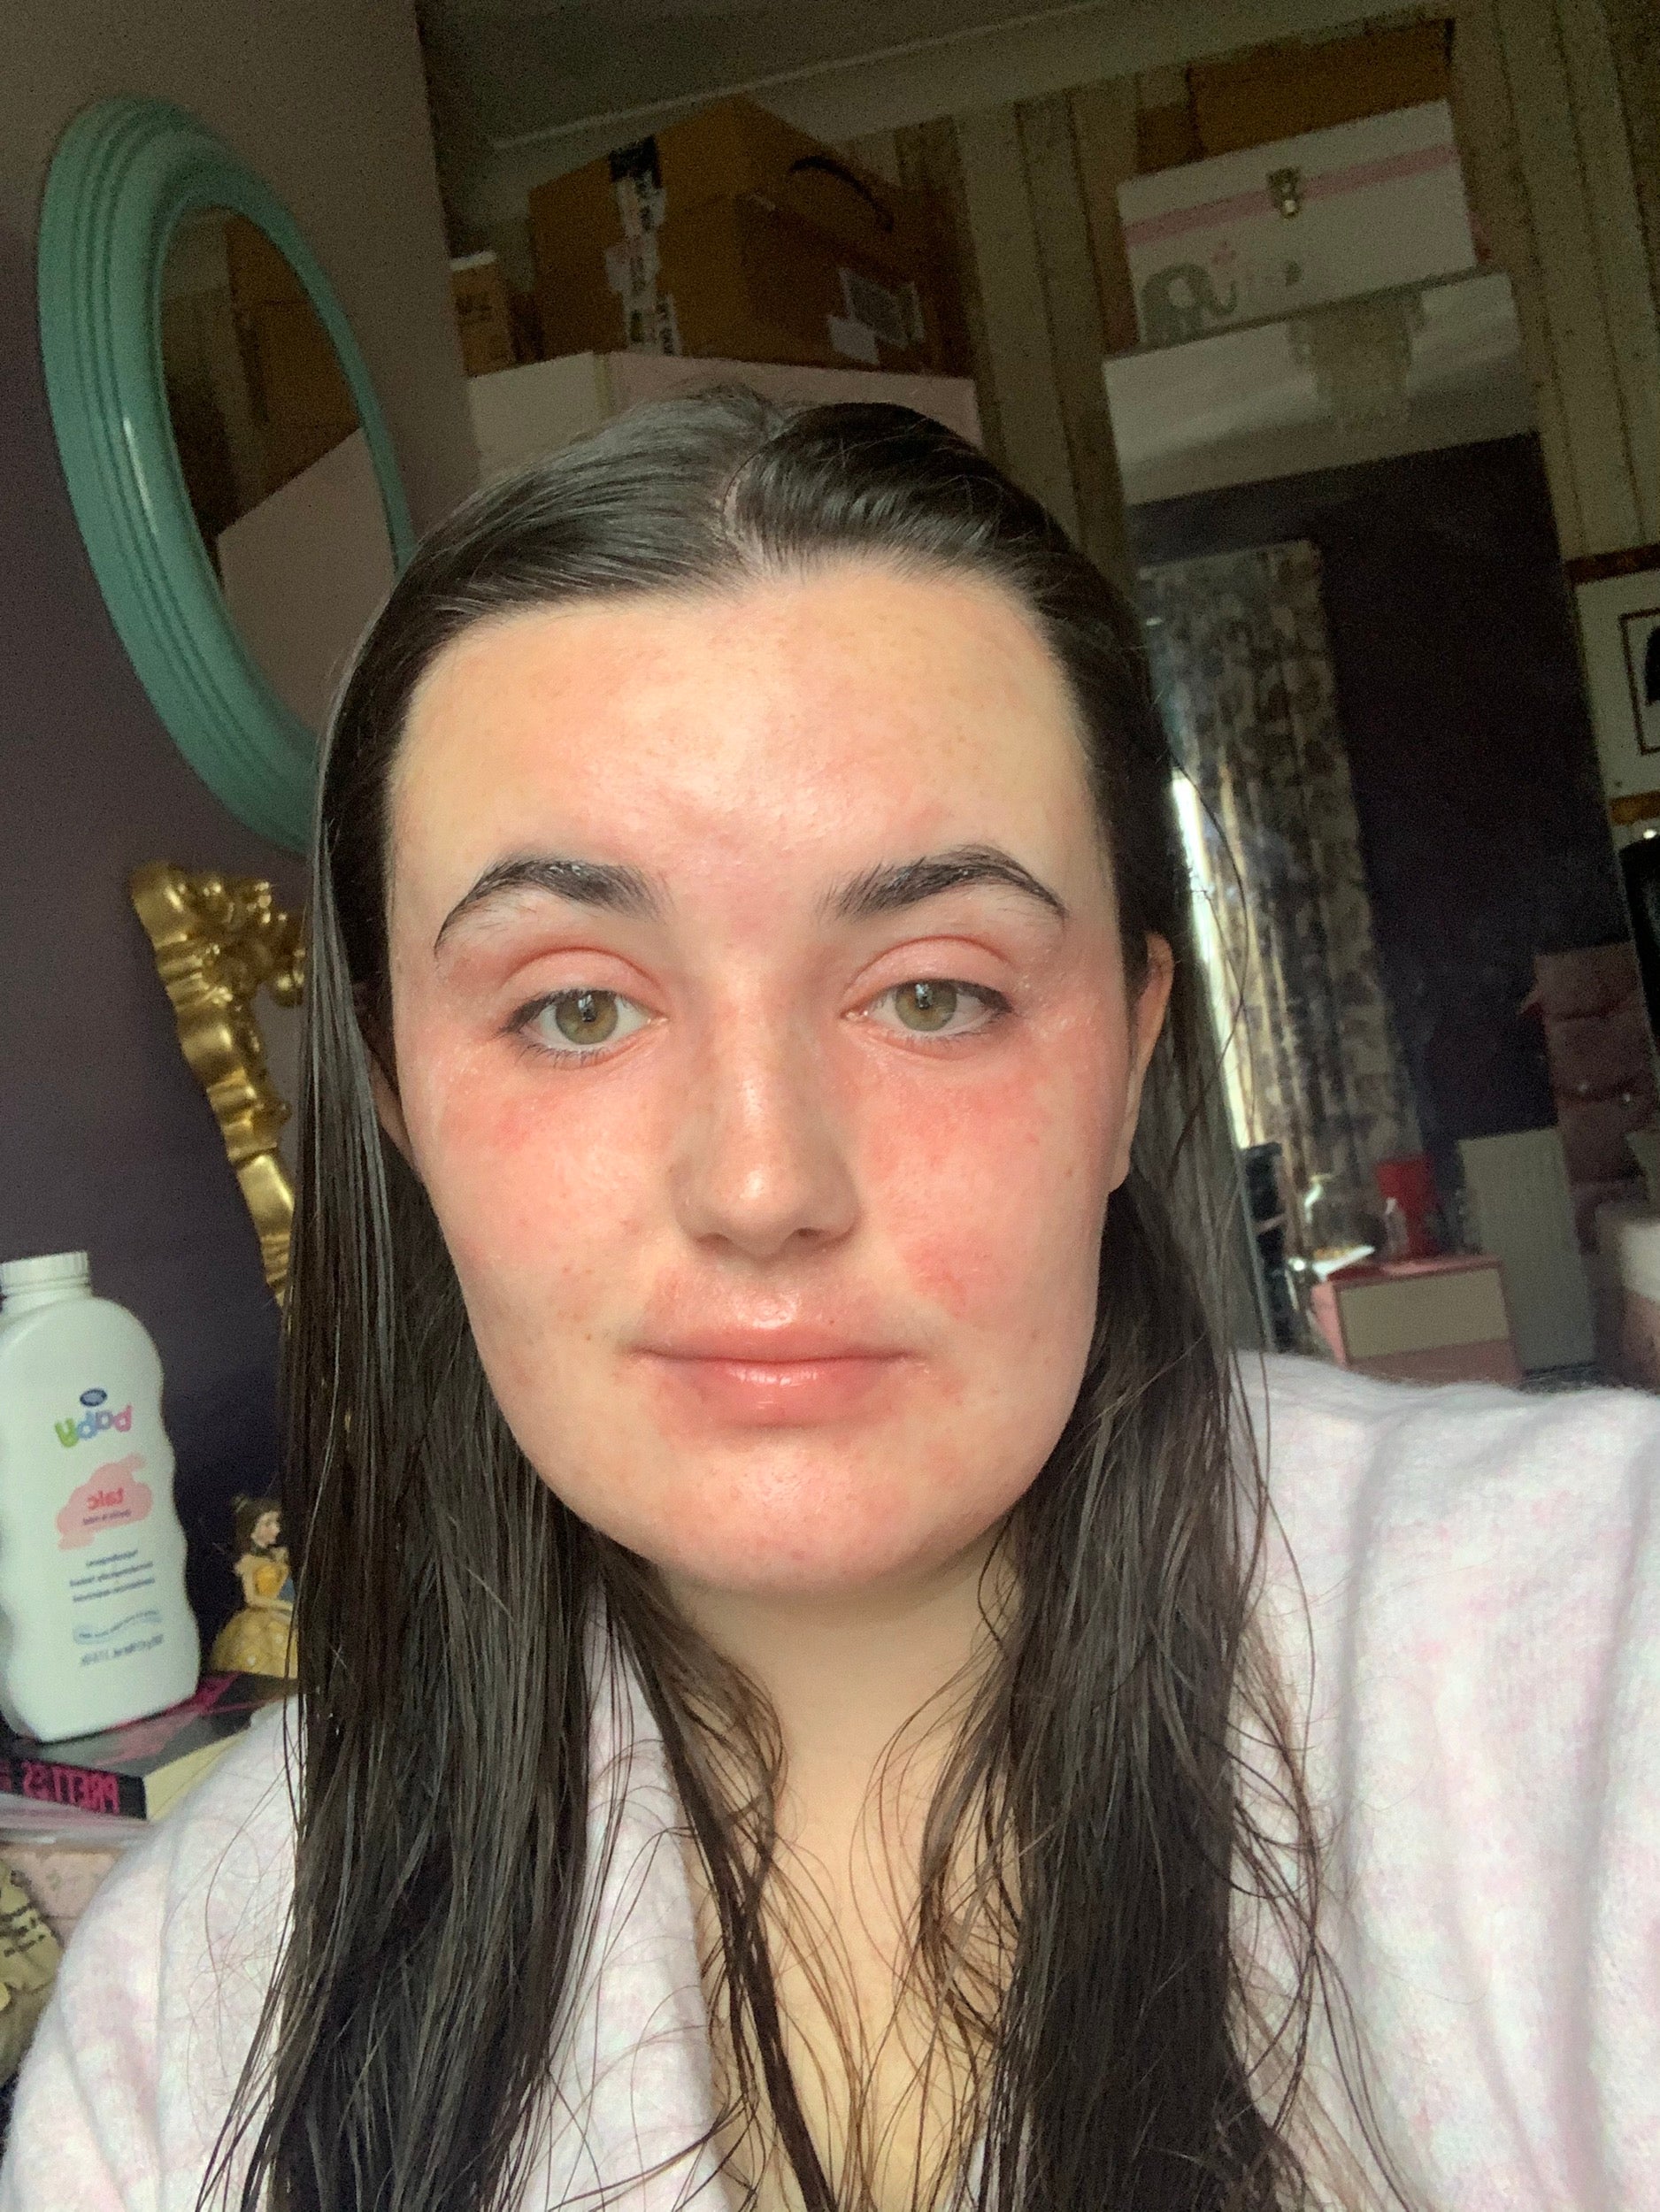 Megan has had eczema since she was a baby